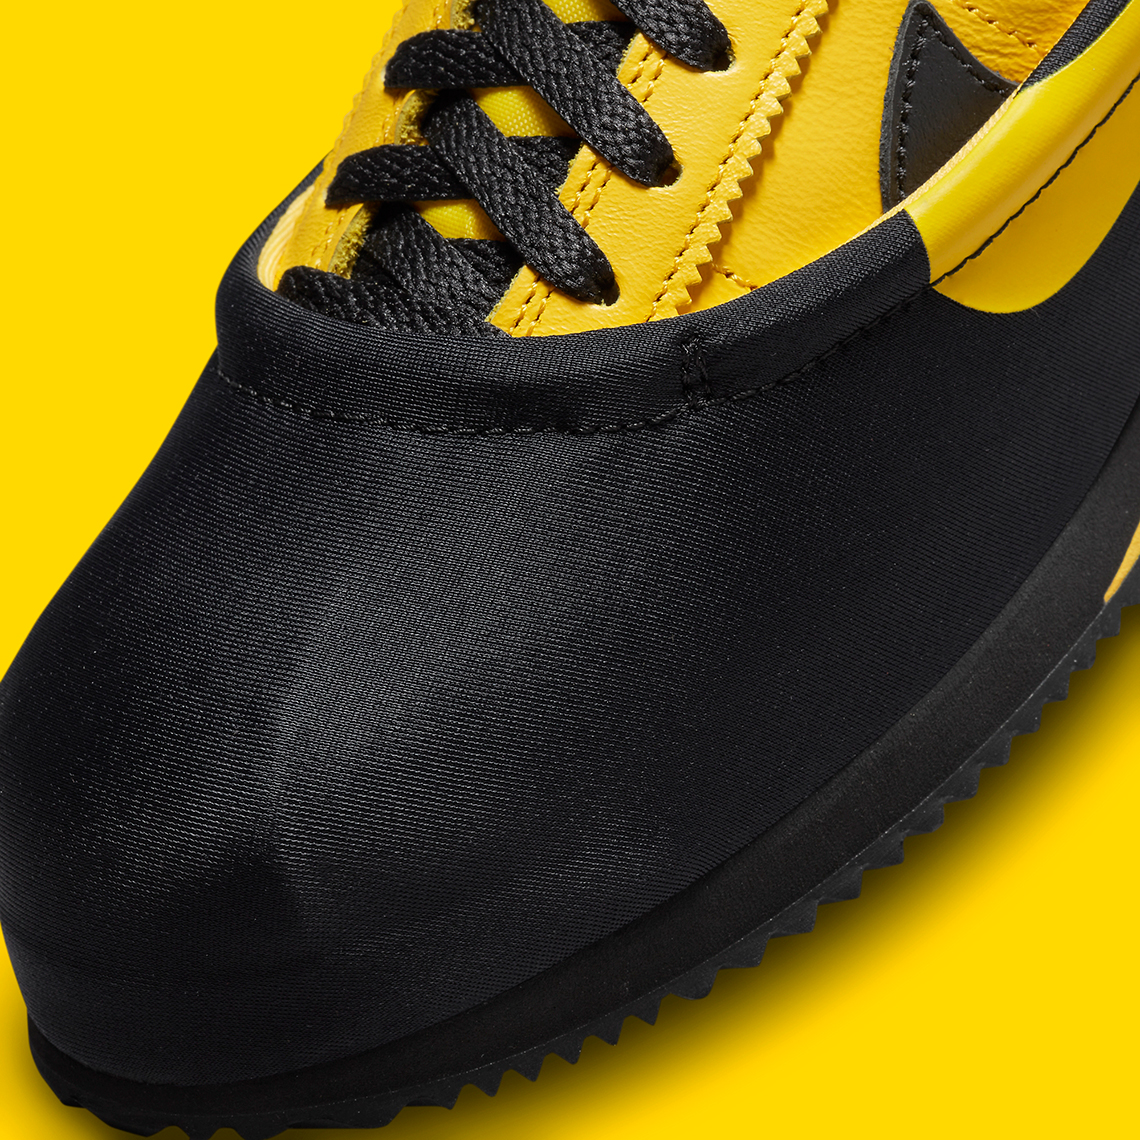 Clot Nike air Cortez Clotez Yellow Black Dz3239 001 10